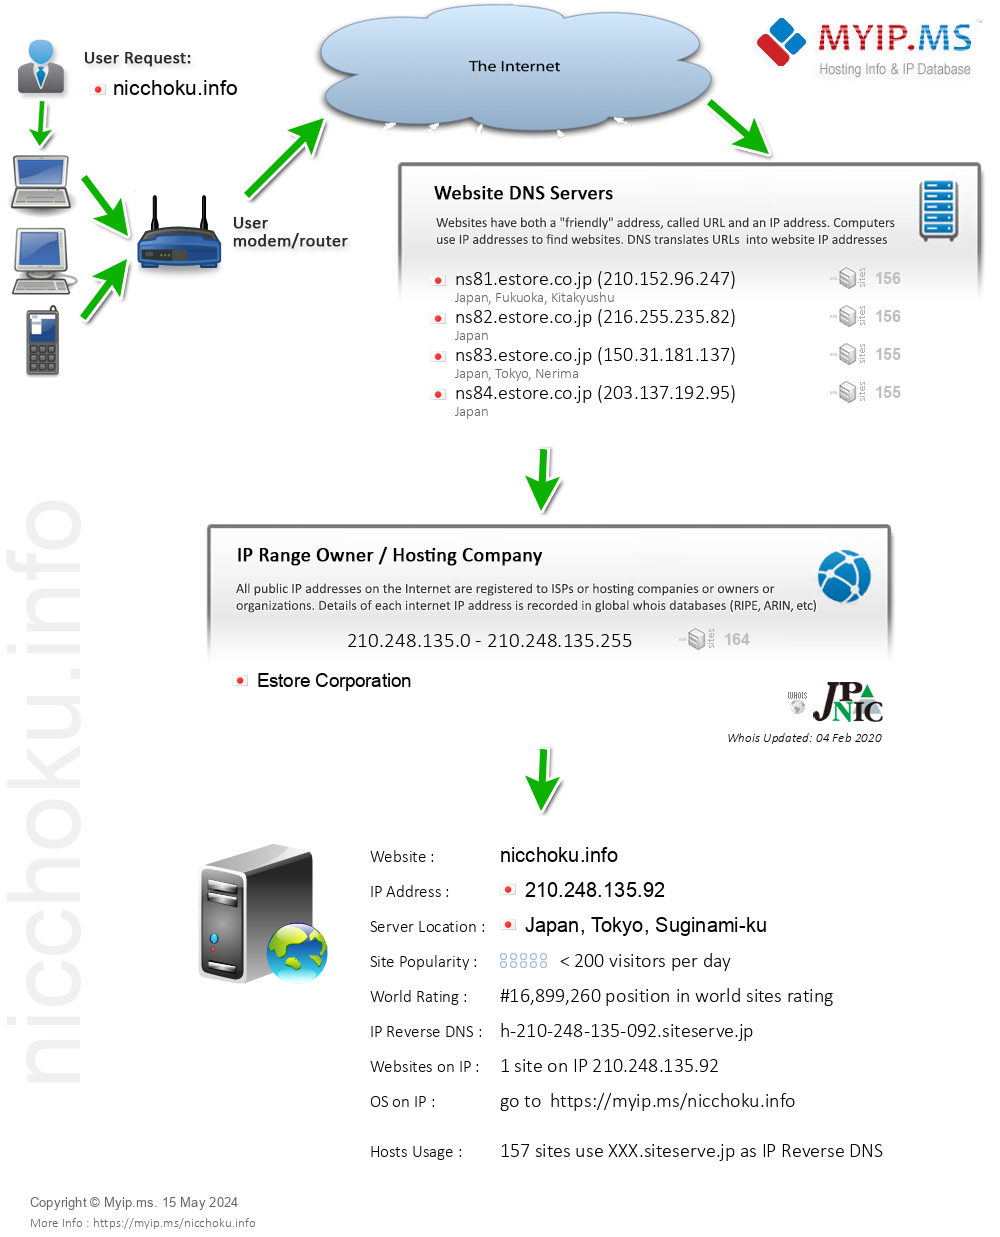 Nicchoku.info - Website Hosting Visual IP Diagram